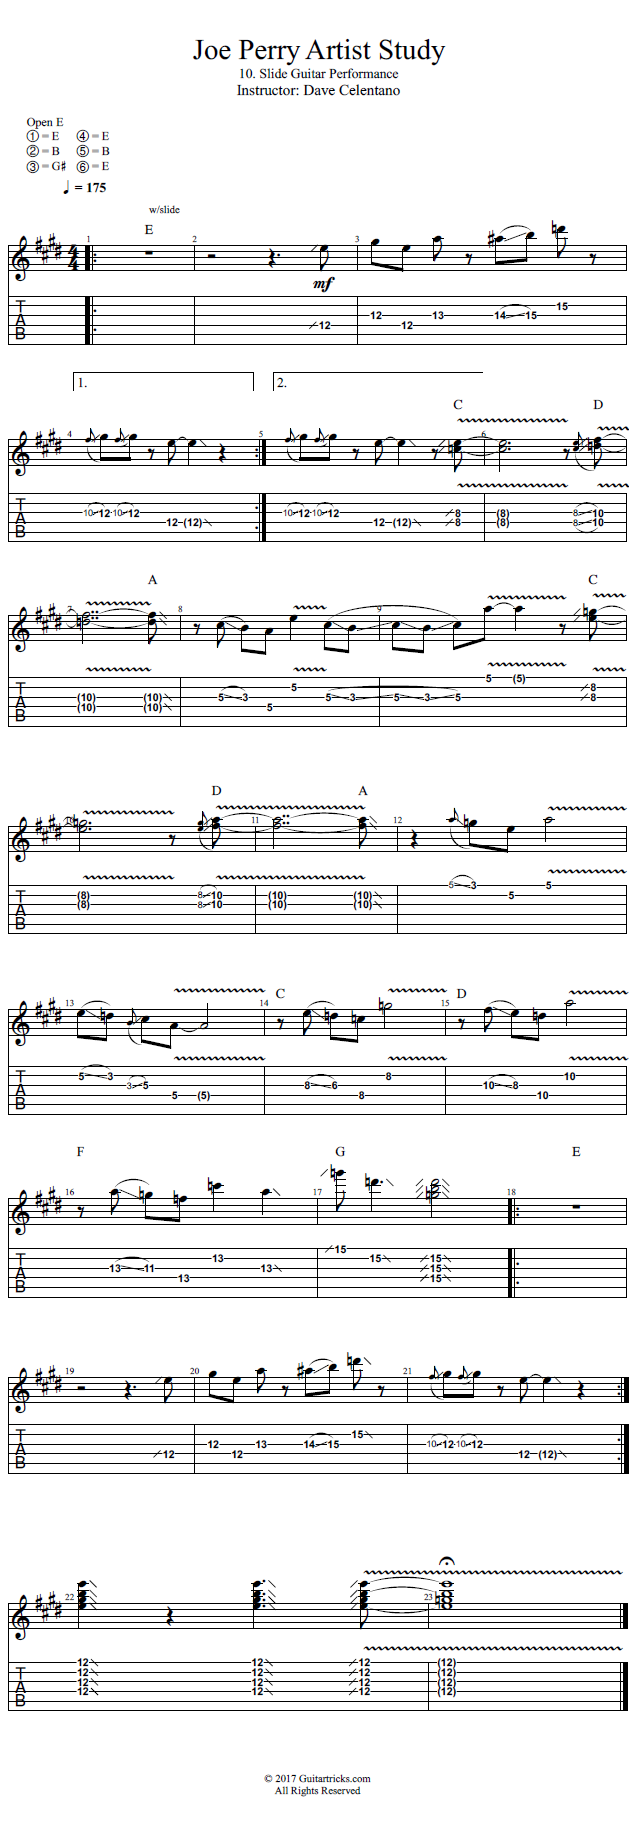 Slide Guitar Performance song notation